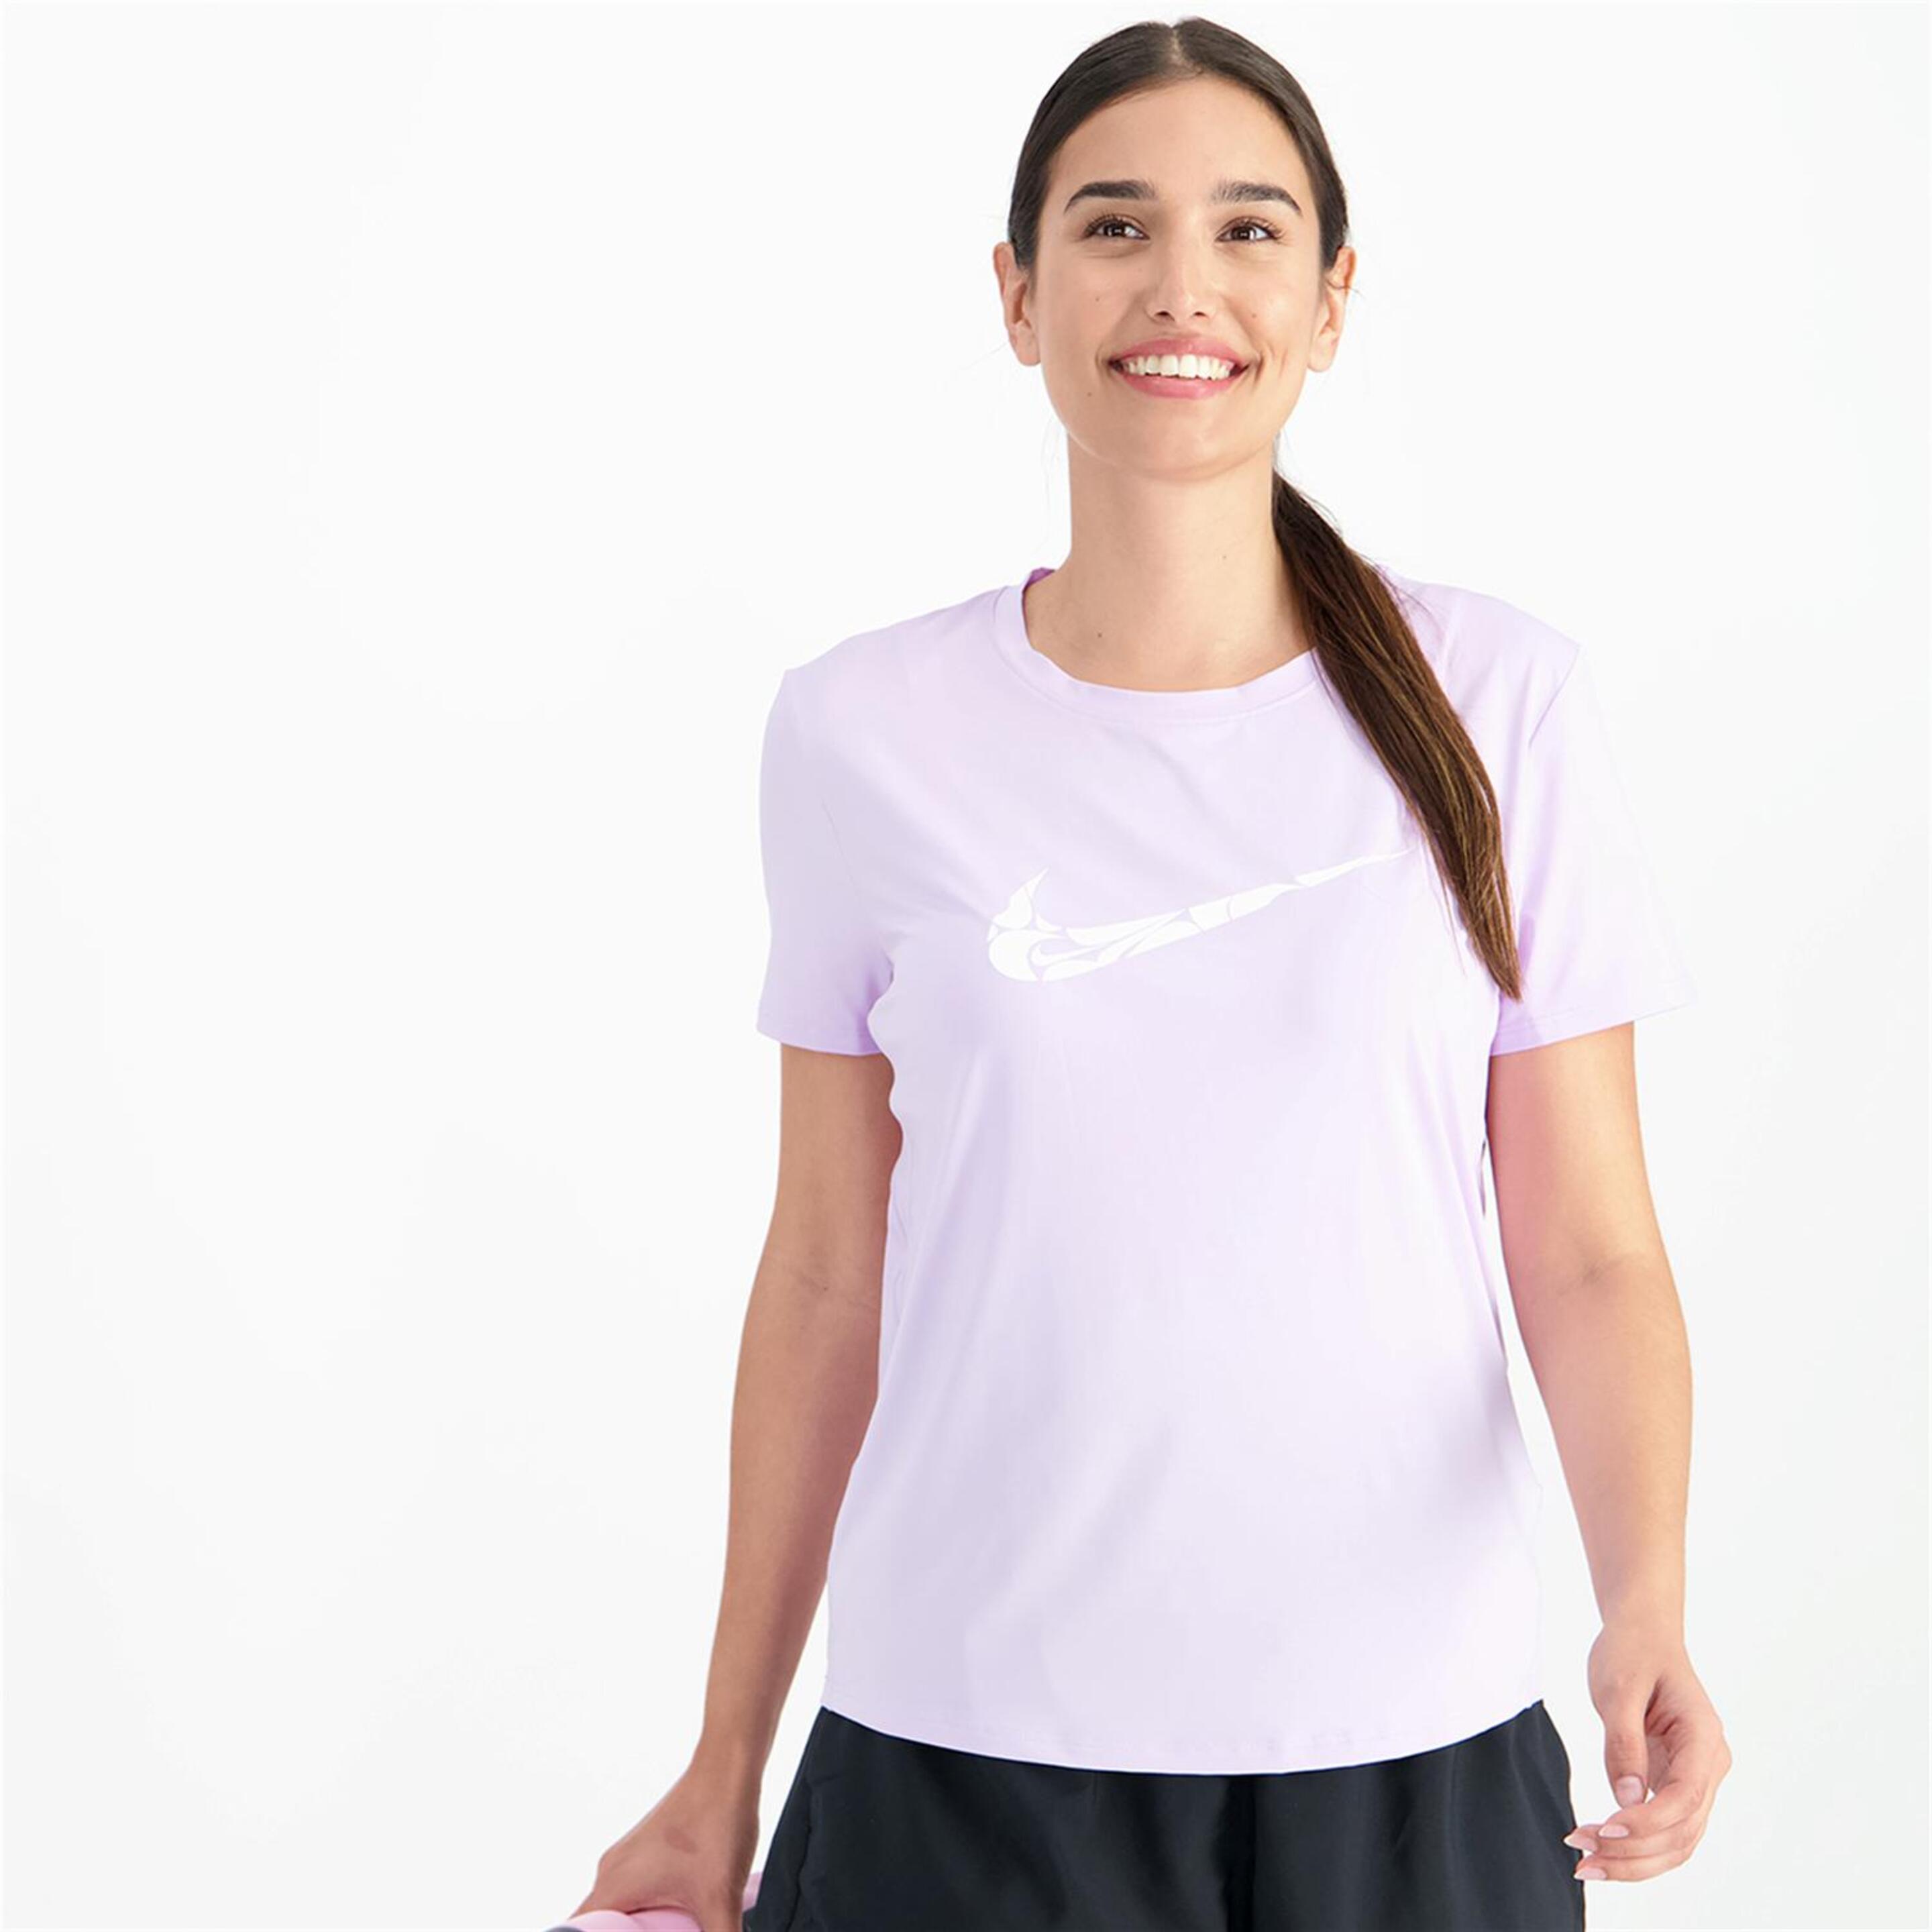 Nike One Swoosh - morado - Camiseta Running Mujer